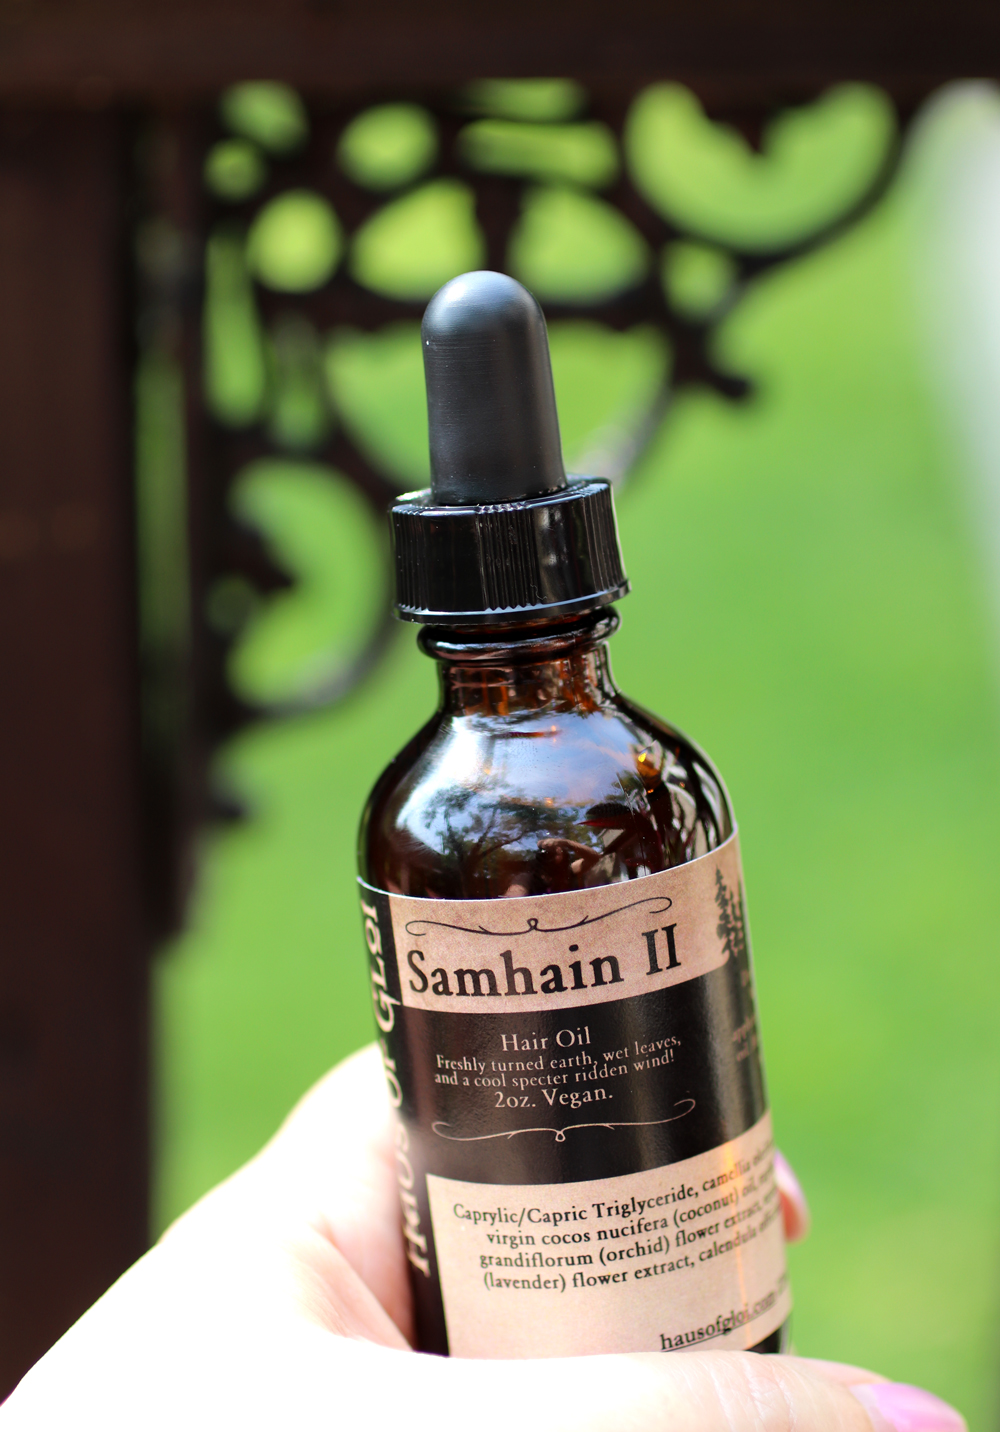 Haus of Gloi Samhain II hair oil review